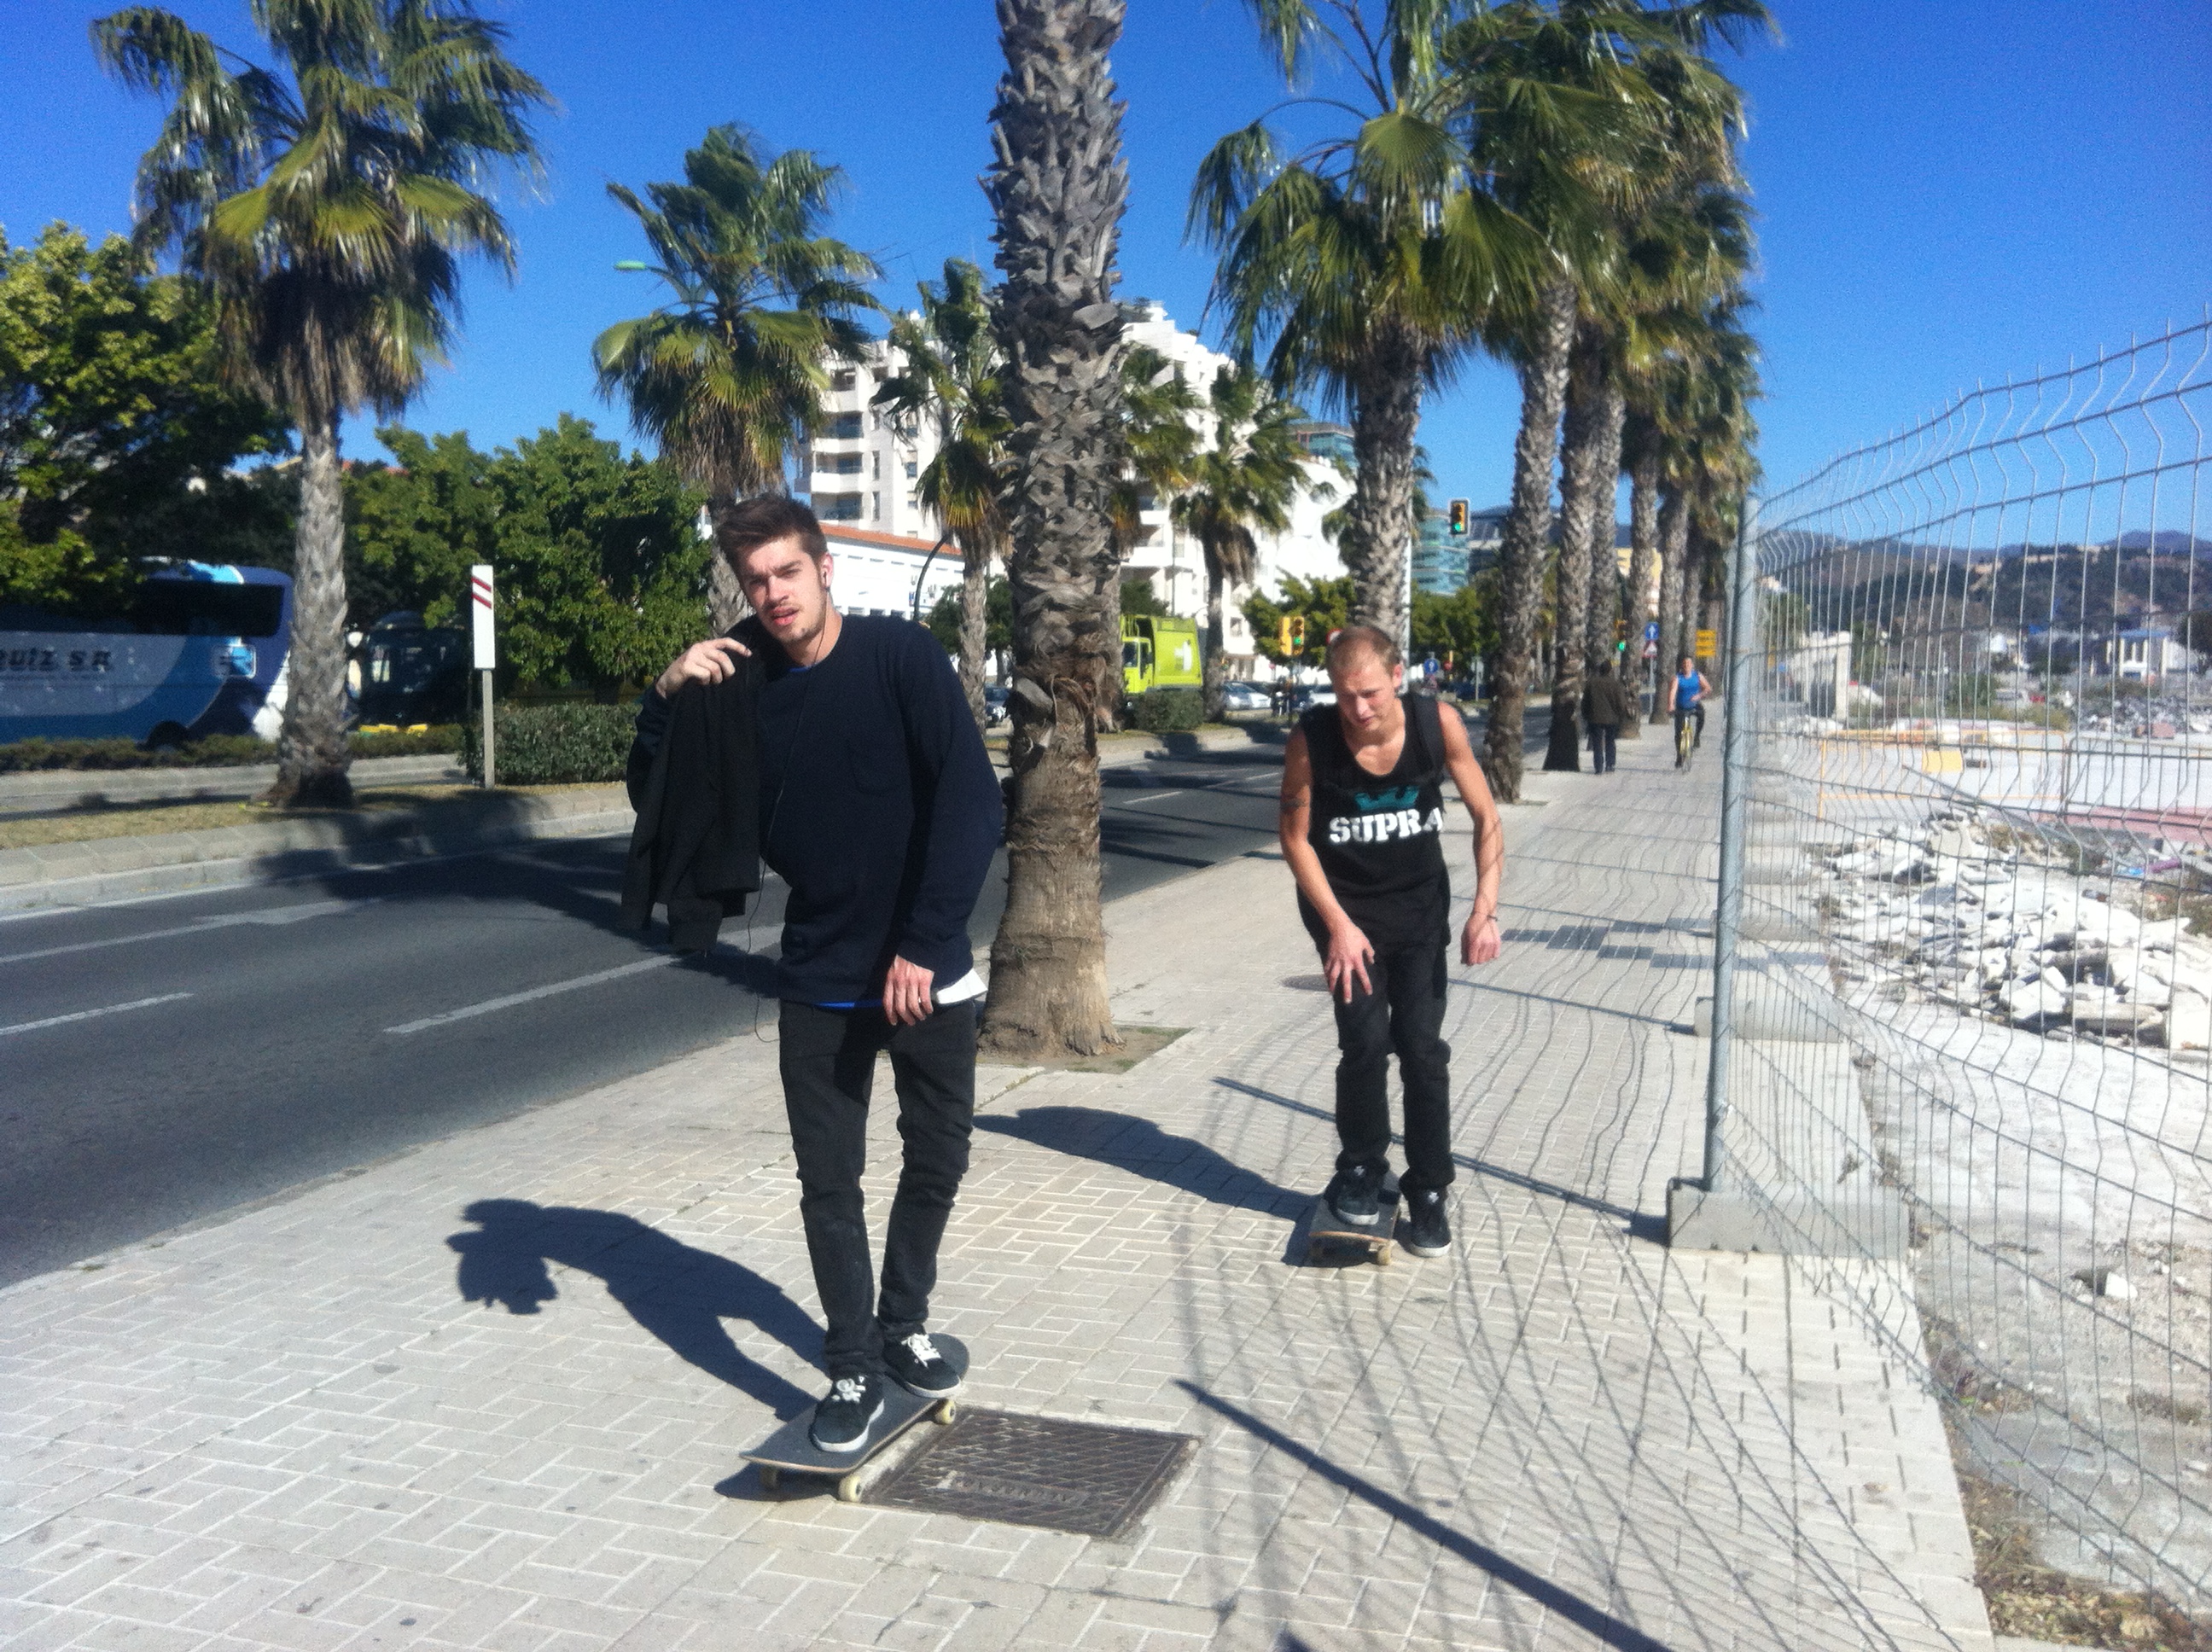 Malaga skateboard trip 2013 Danmark skateboard tur labforum labcph mads christensen bertram kirchert benjamin rubæk